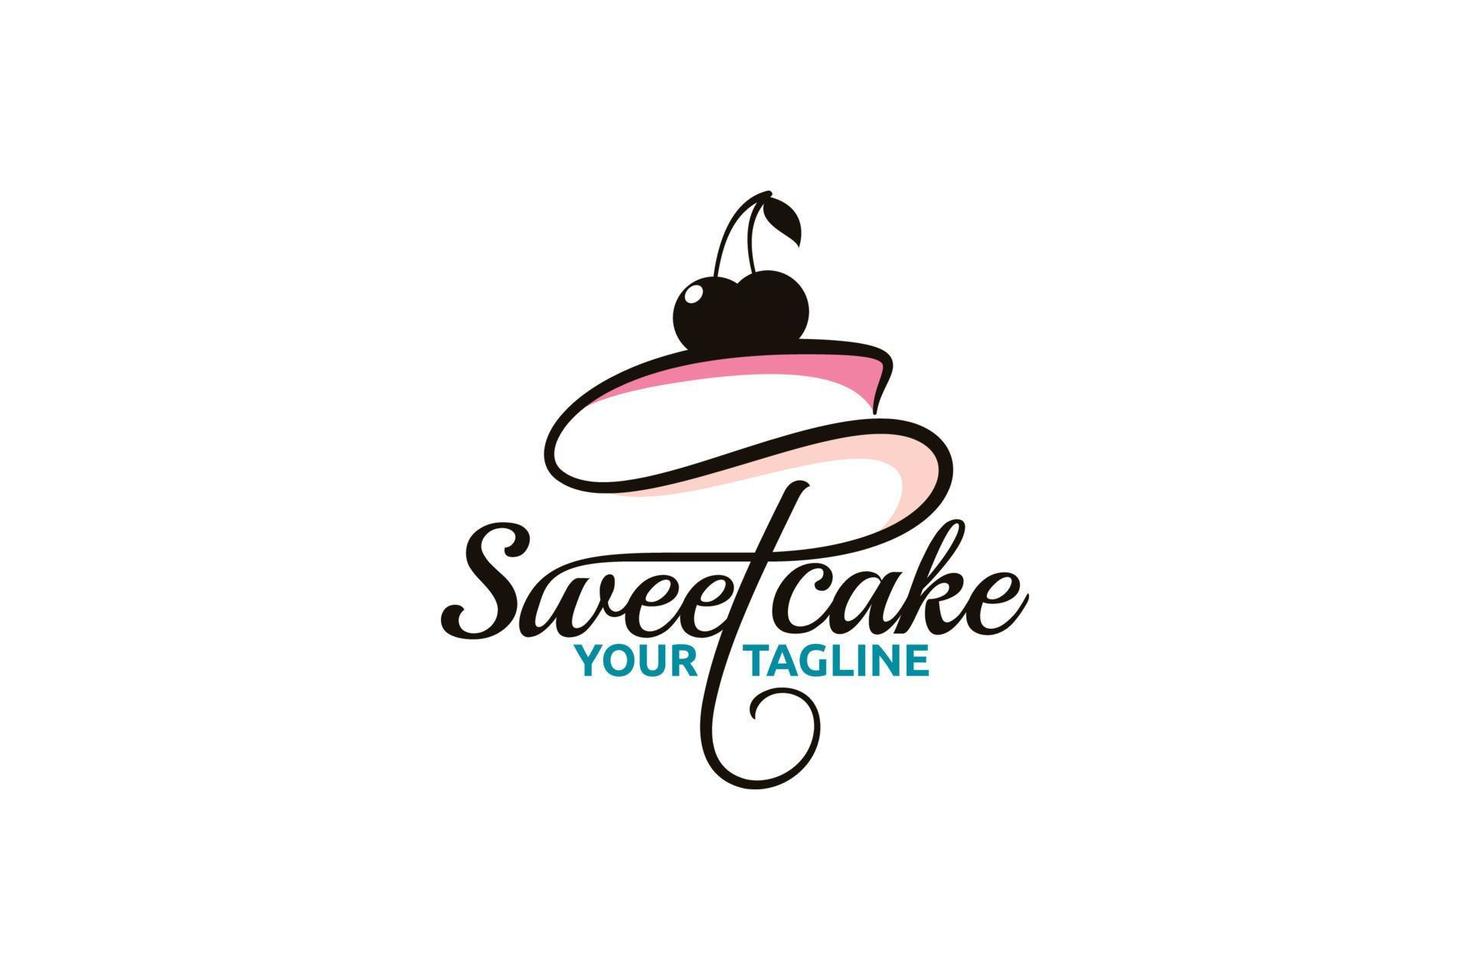 elegant sweet cake logo for any business especially for cakery, bakery, cake shop, cafe,etc. vector